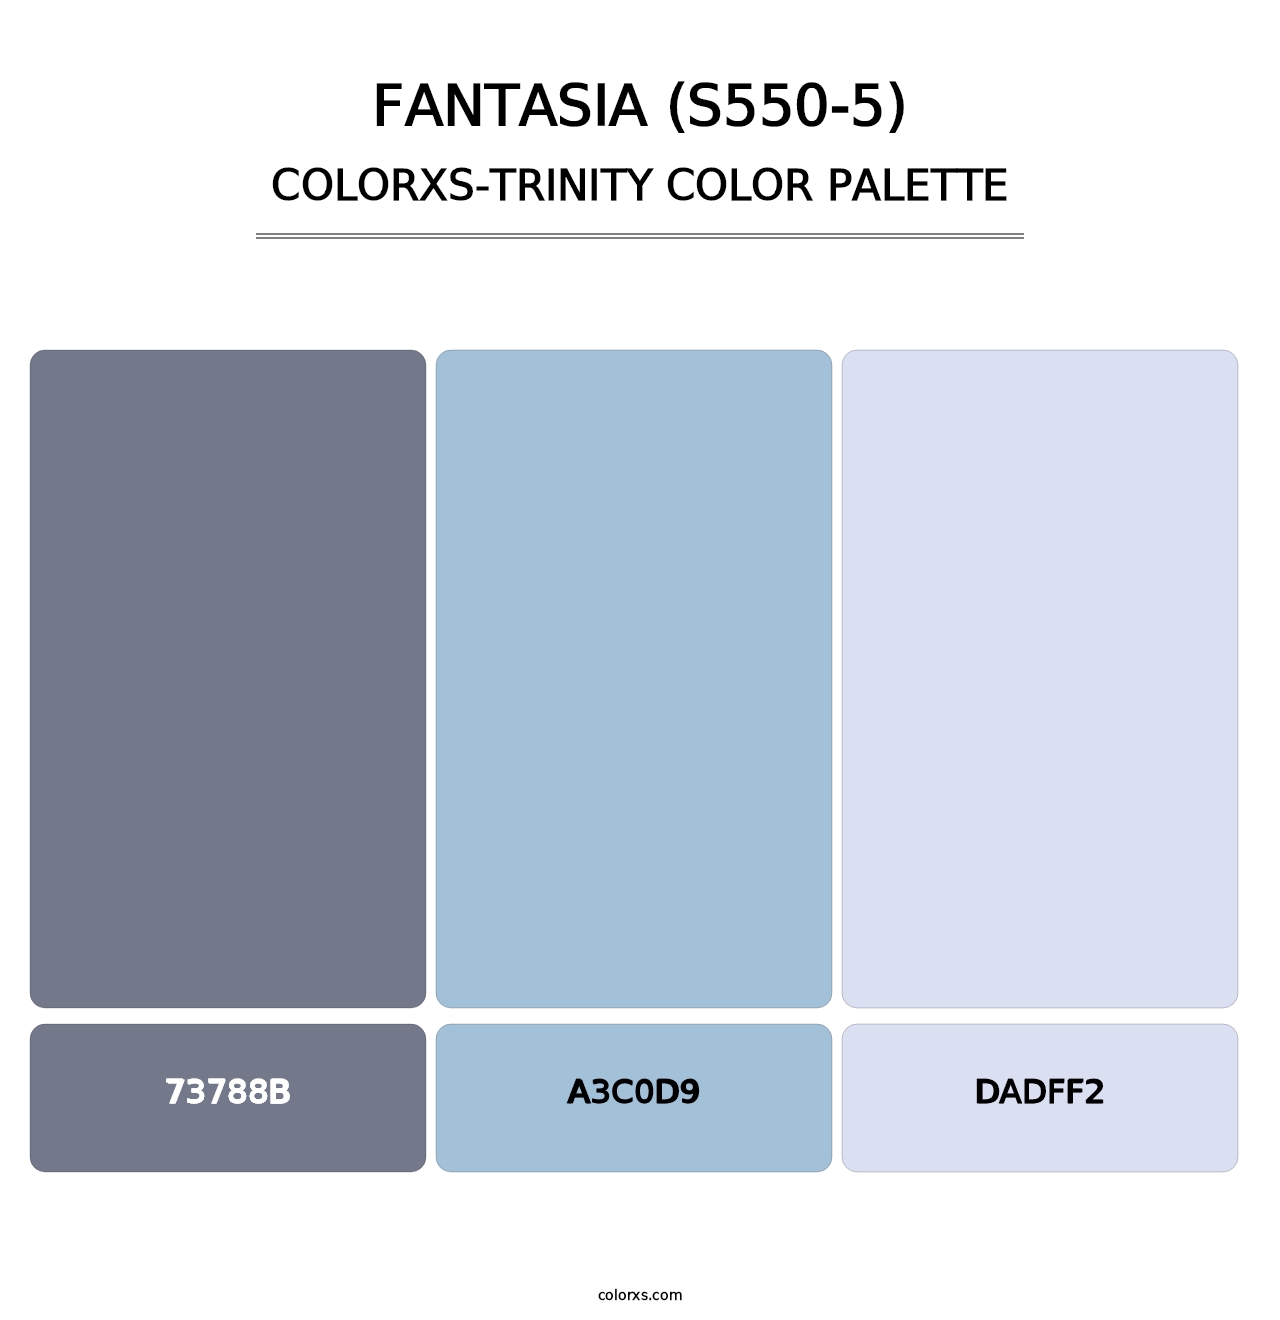 Fantasia (S550-5) - Colorxs Trinity Palette